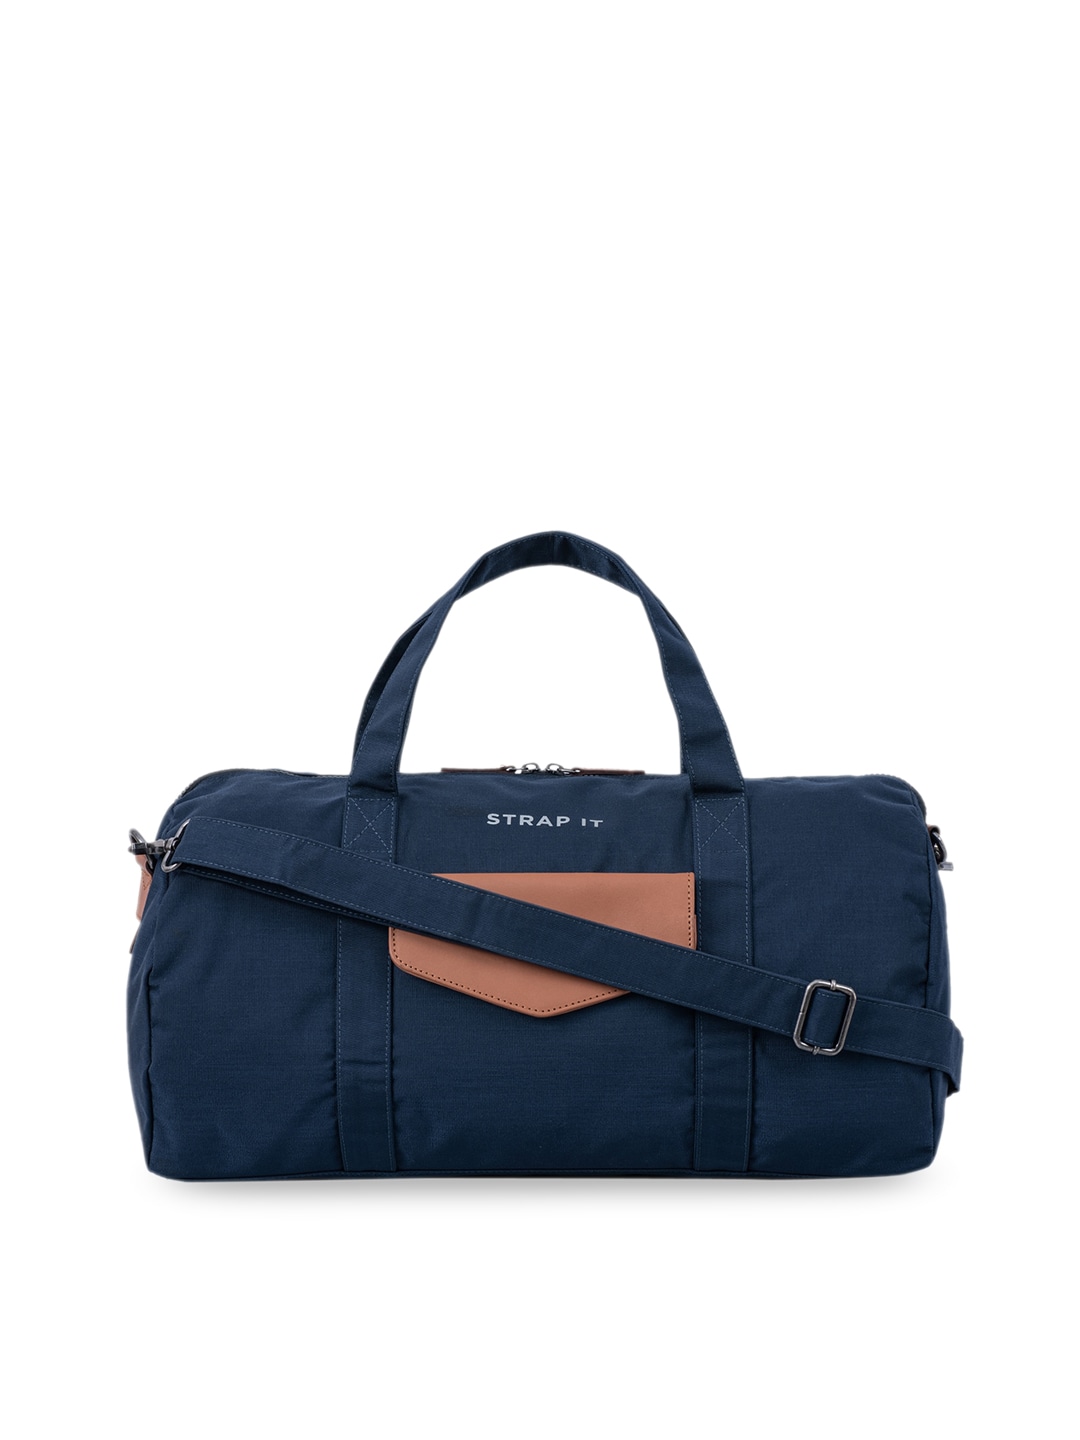 Accessories Duffel Bag | STRAP IT Blue Solid Duffel Bag - SV86591